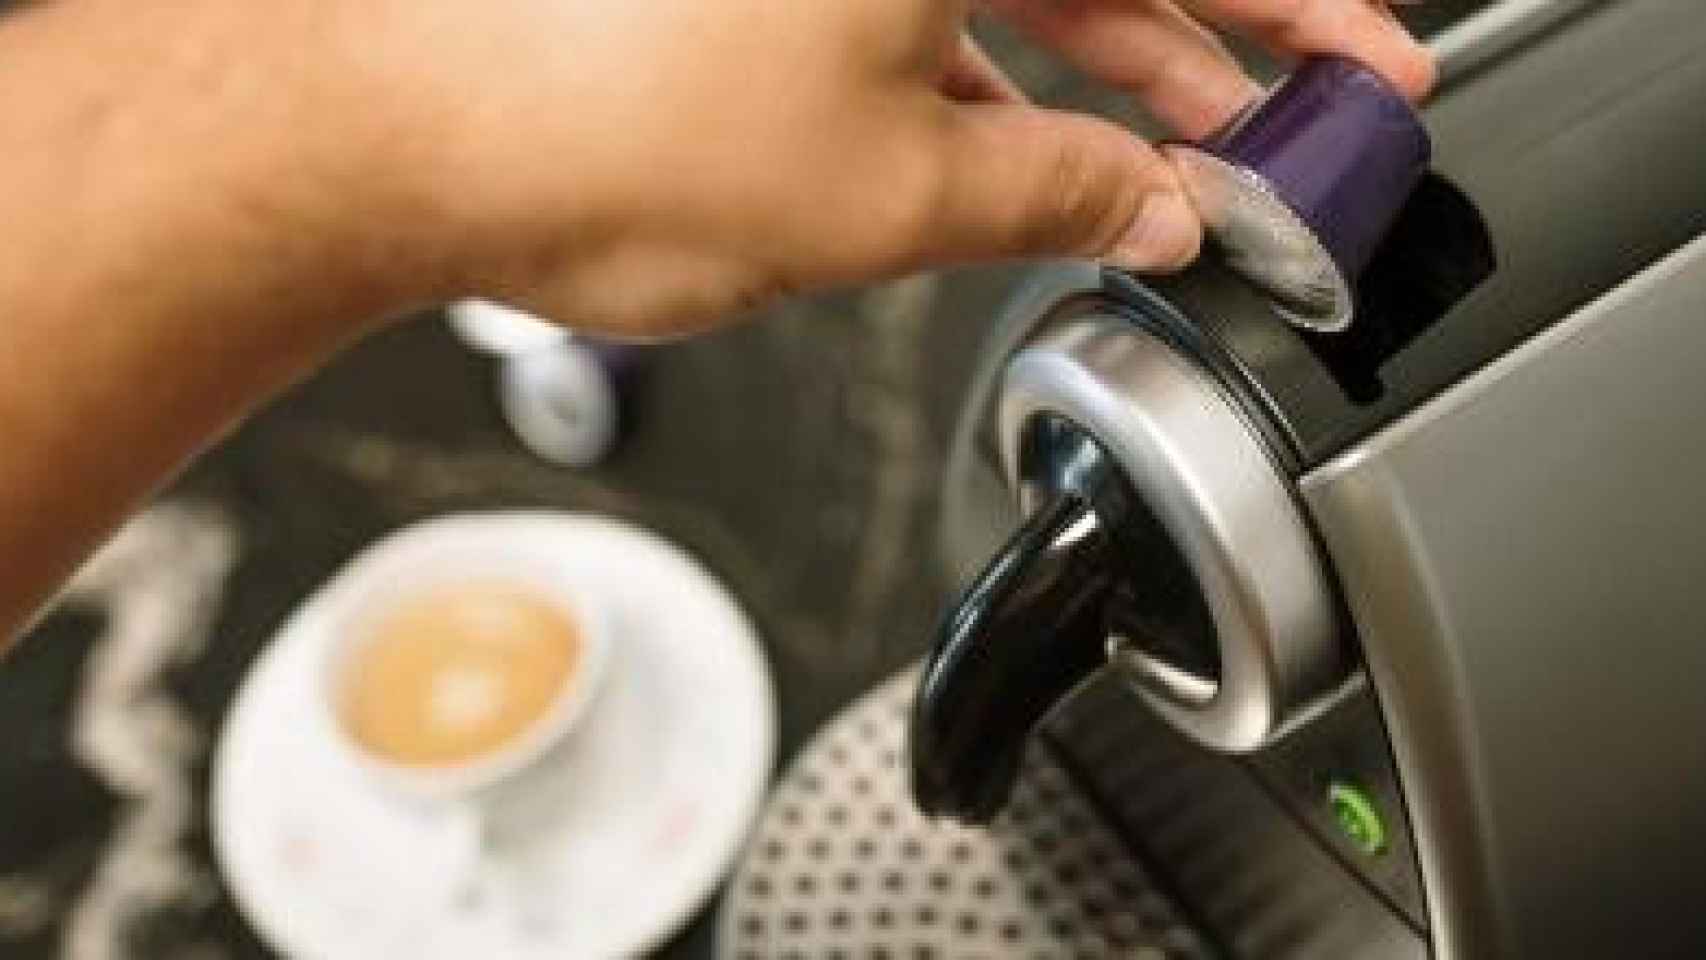 Comprar Cafetera Delonghi Dolce Gusto Edg260r barata con envío rápido